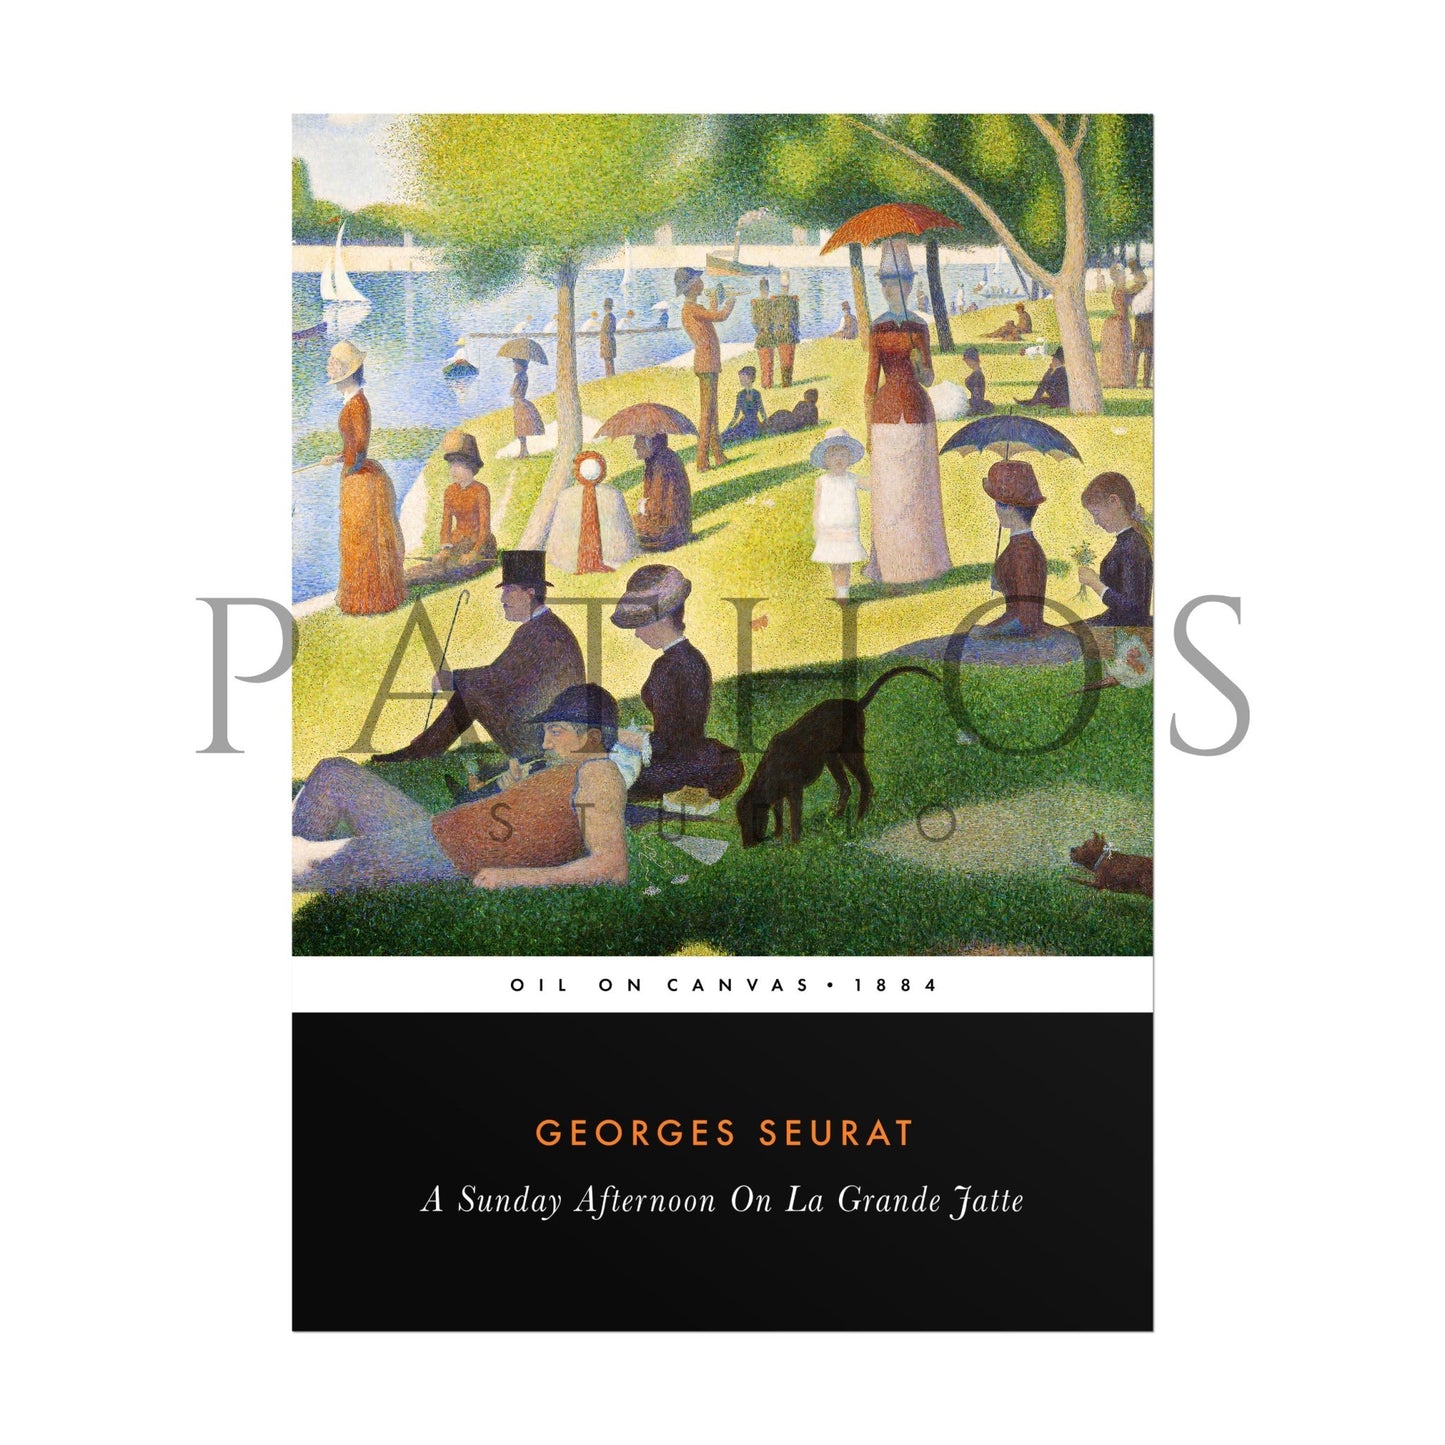 GEORGES SEURAT - A Sunday Afternoon On La Grande Jatte (Vintage Classic Style) - Pathos Studio - Art Prints